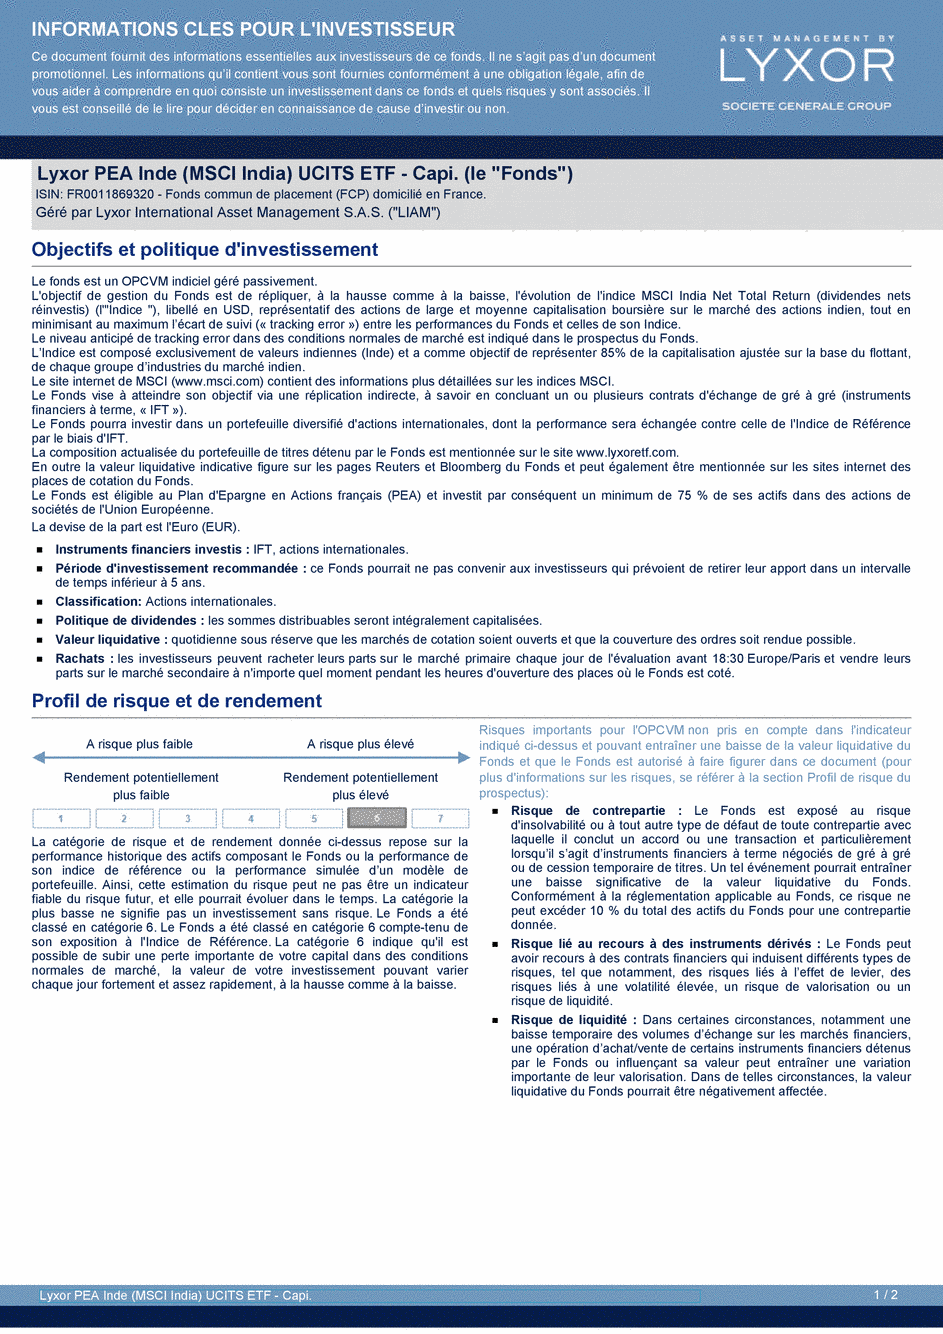 DICI Lyxor PEA Inde (MSCI India) UCITS ETF - Capi. - 19/02/2021 - Français